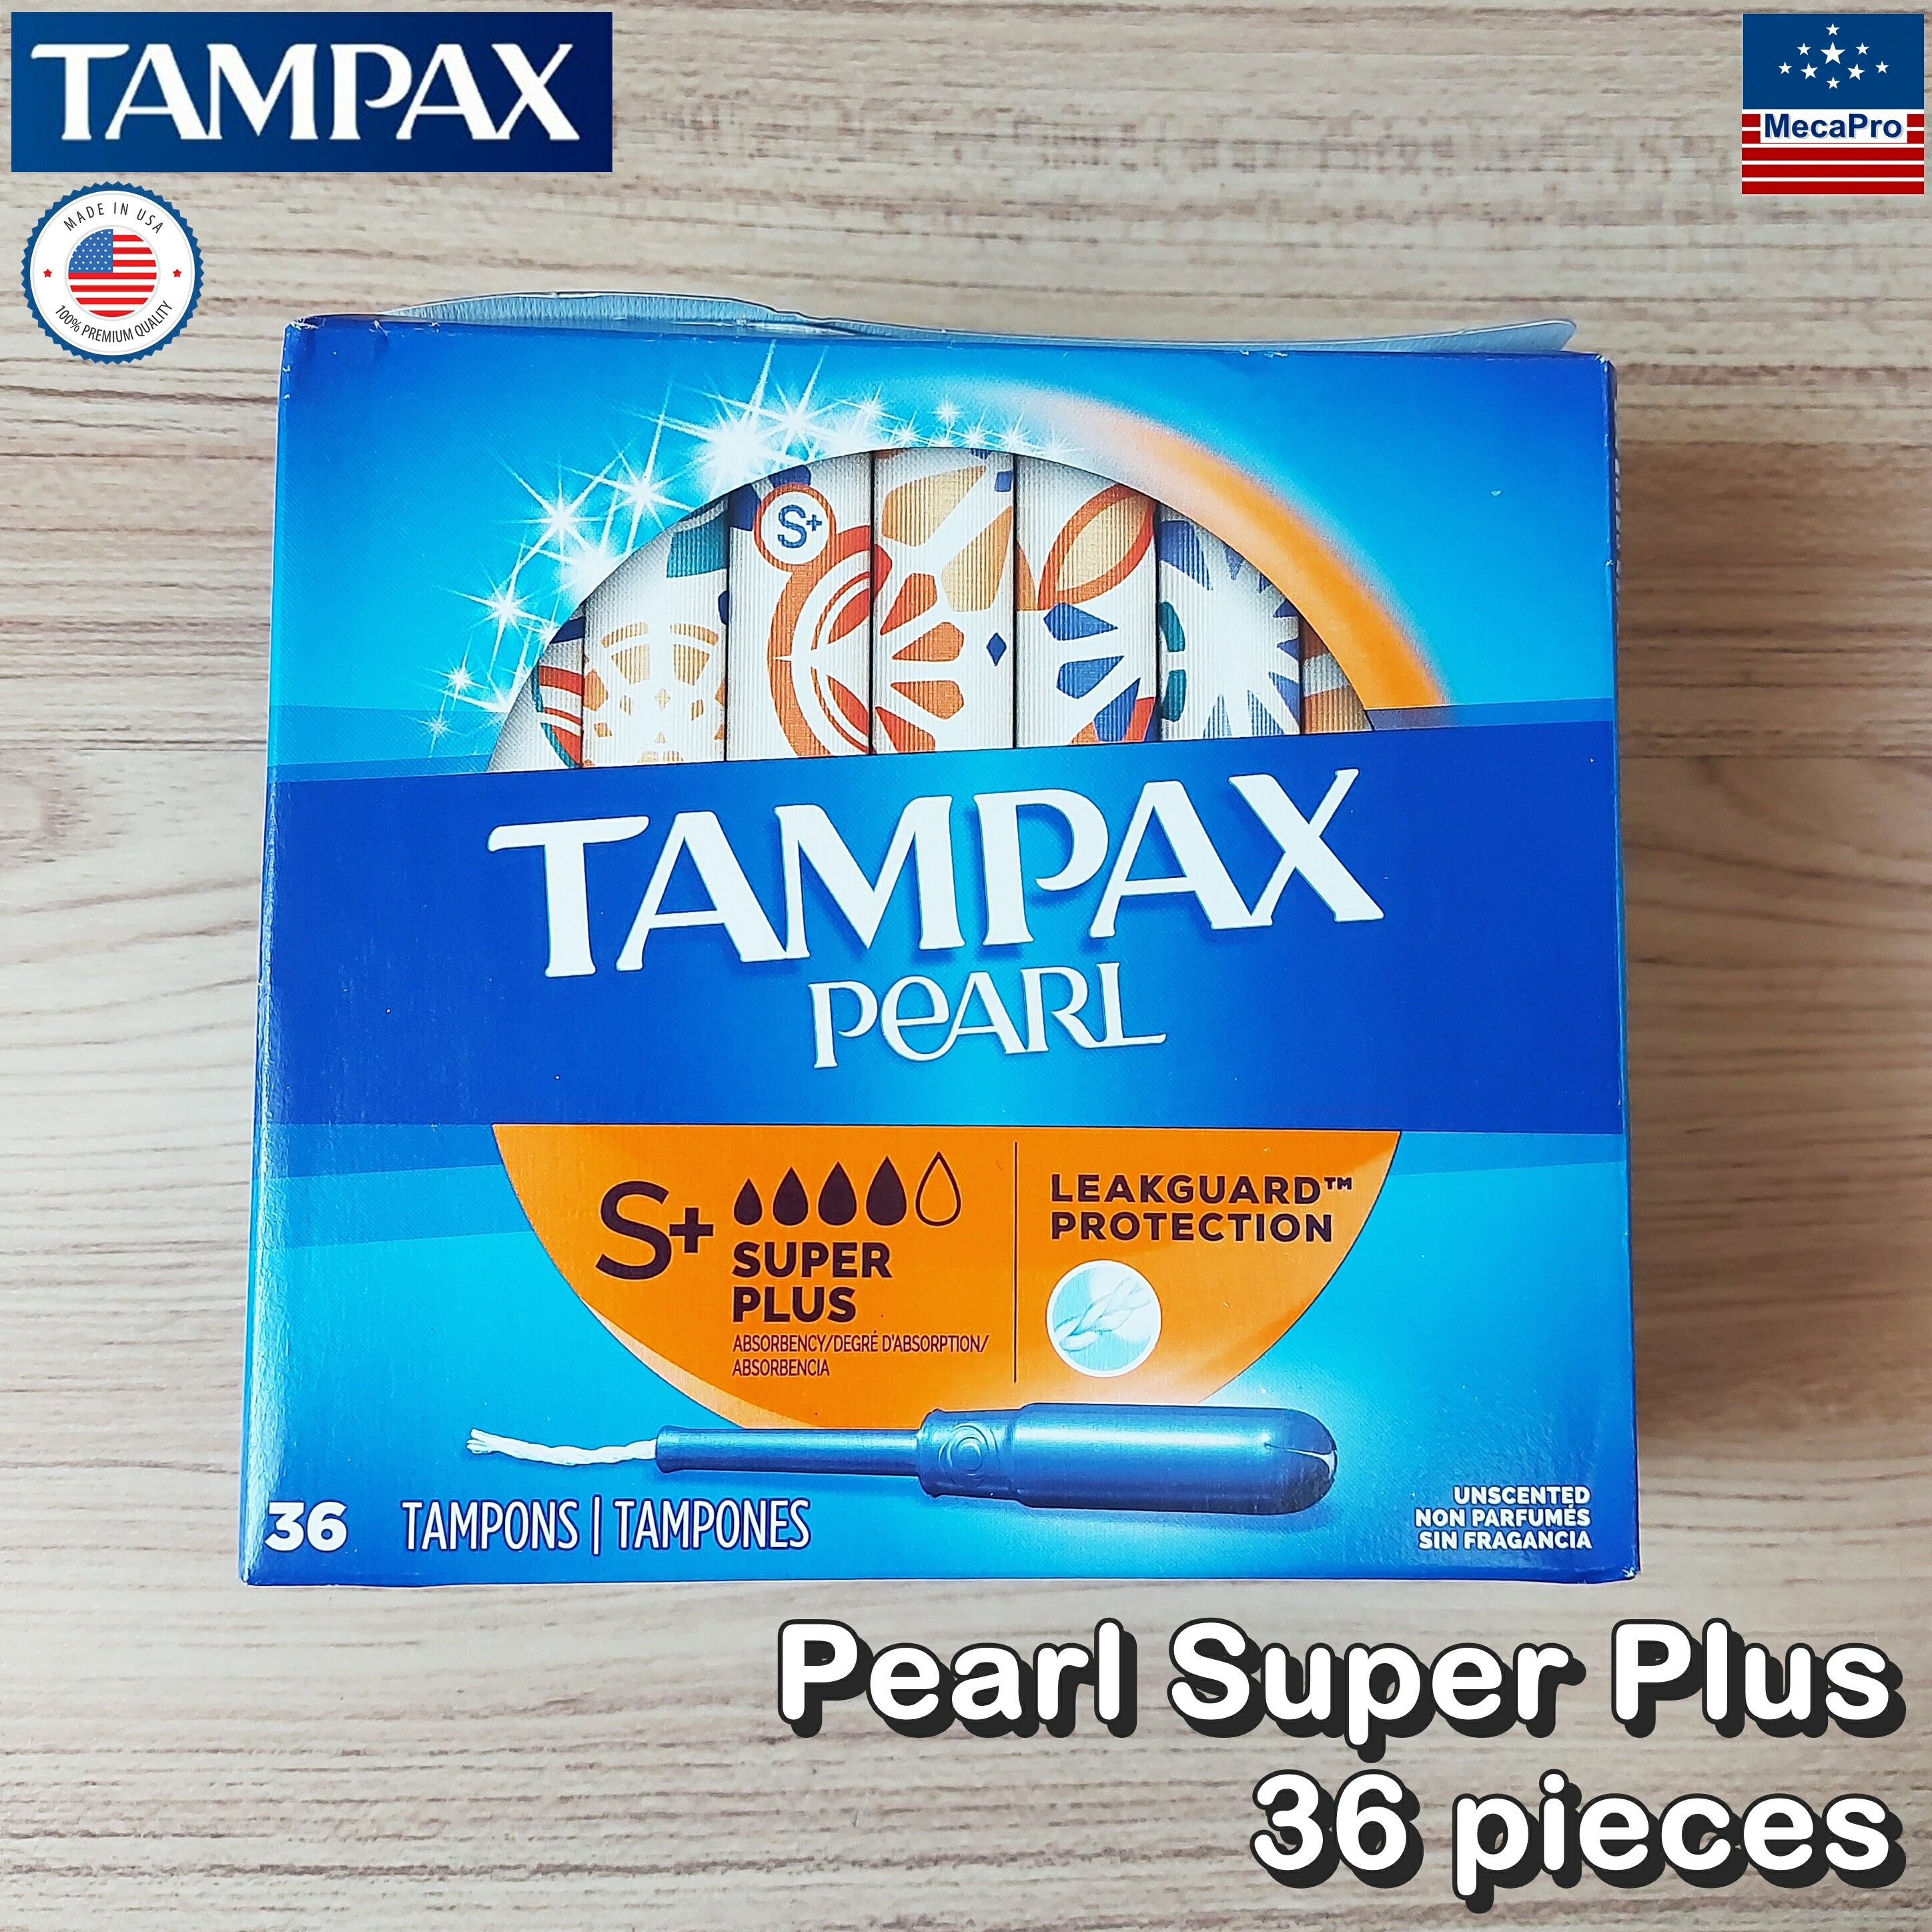 Tampax® Pearl Super Plus Plastic Tampons 36 pieces ผ้าอนามัยแบบสอด 36 ชิ้น เหมาะกับวันมามาก